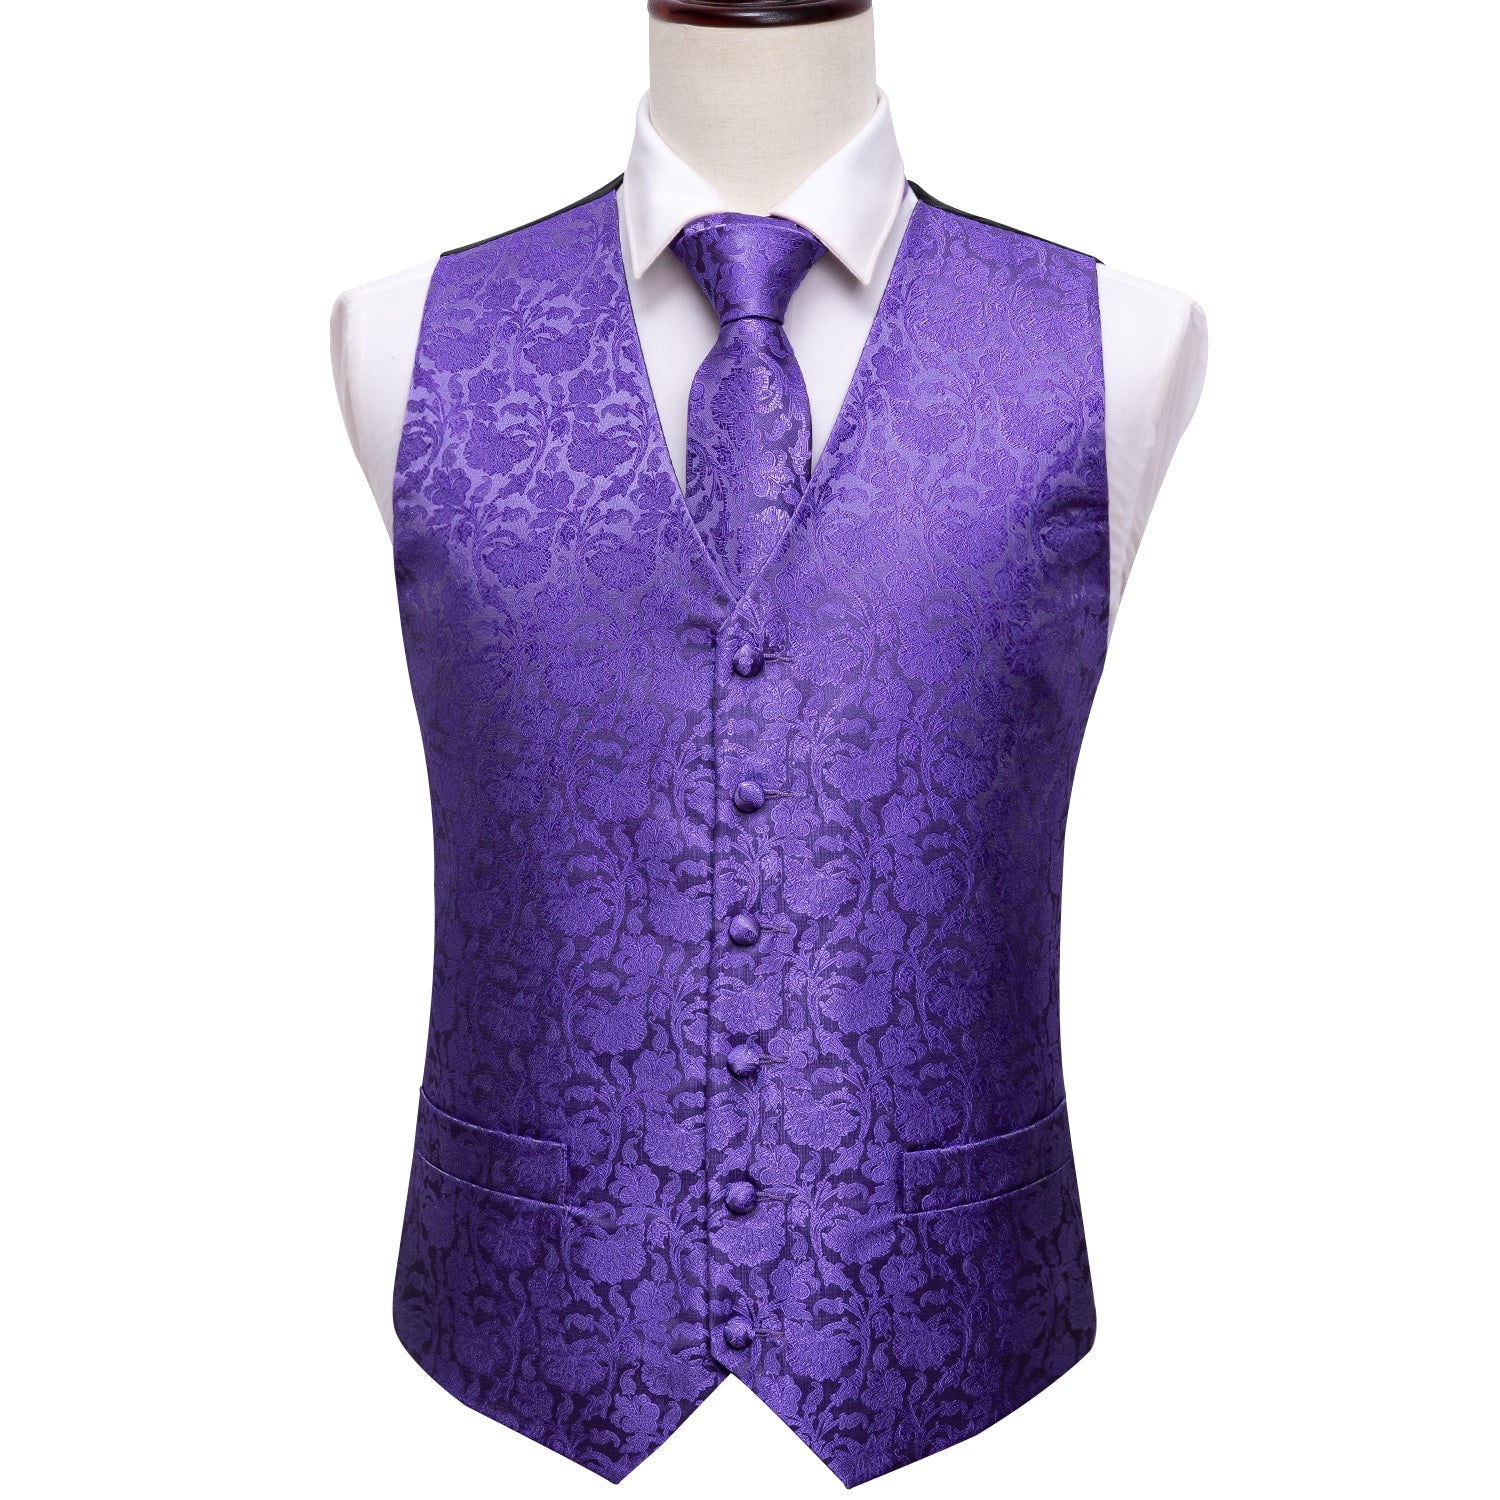 black and purple vest